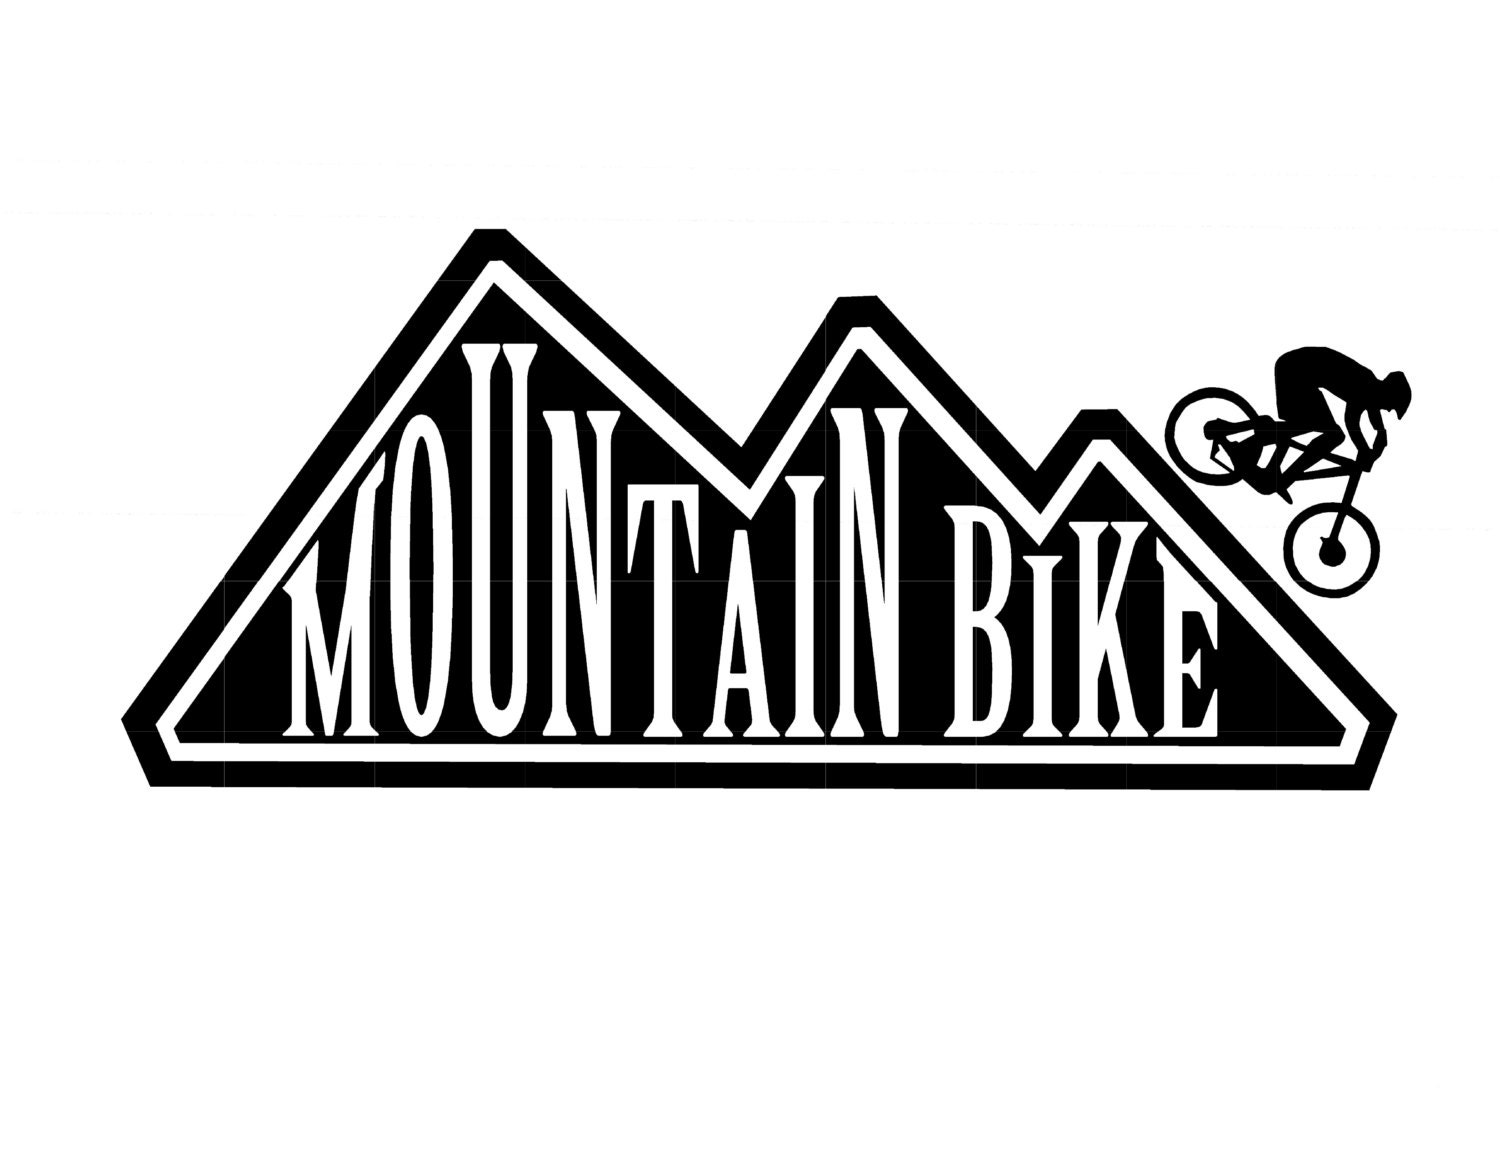 Mountain Bike vinyl decal